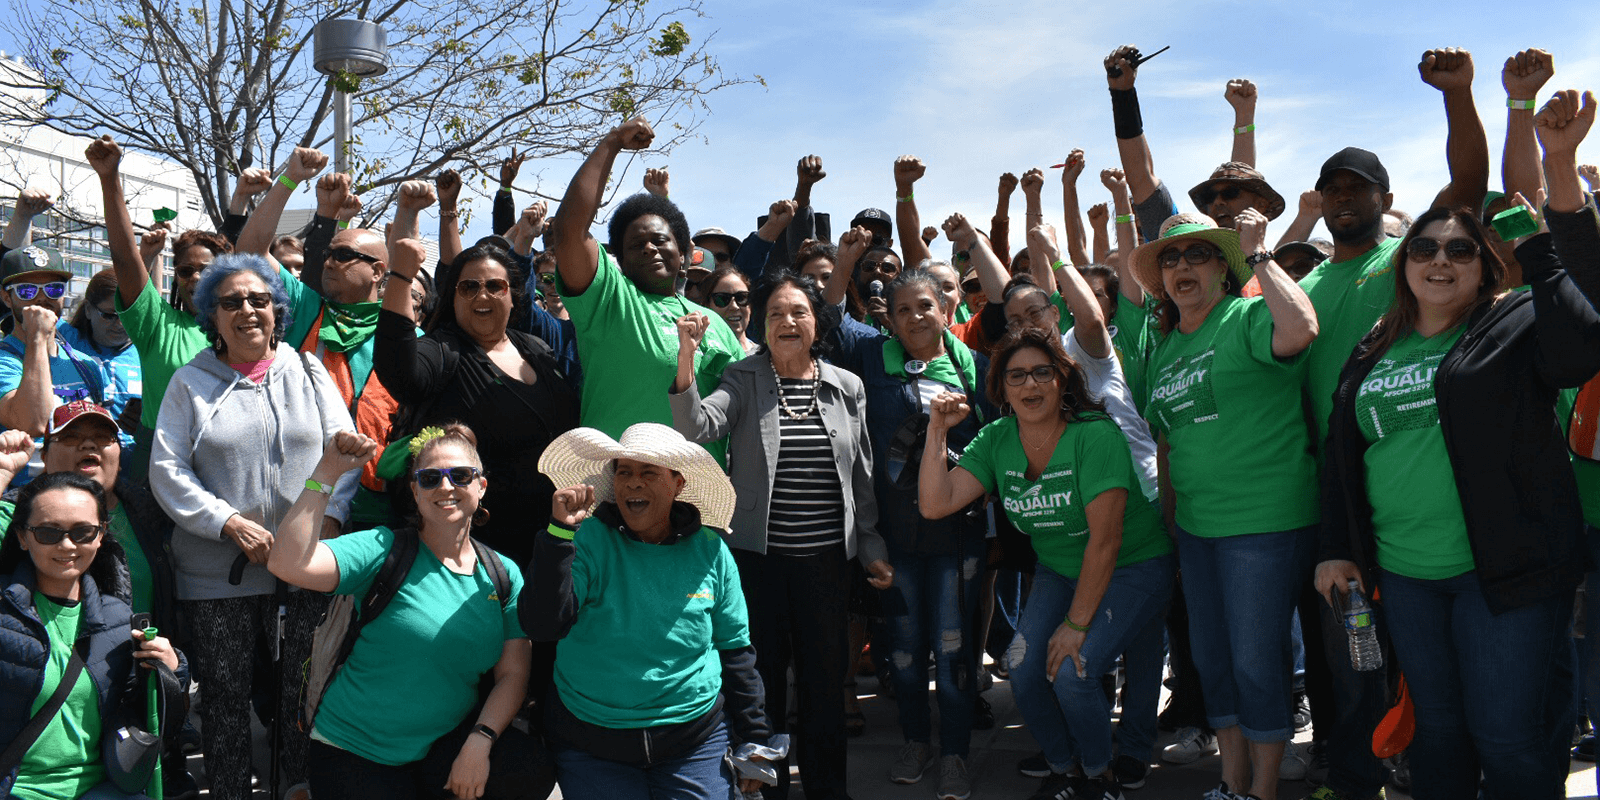 Thousands of UC Workers Unite Against Unfair Labor Practices